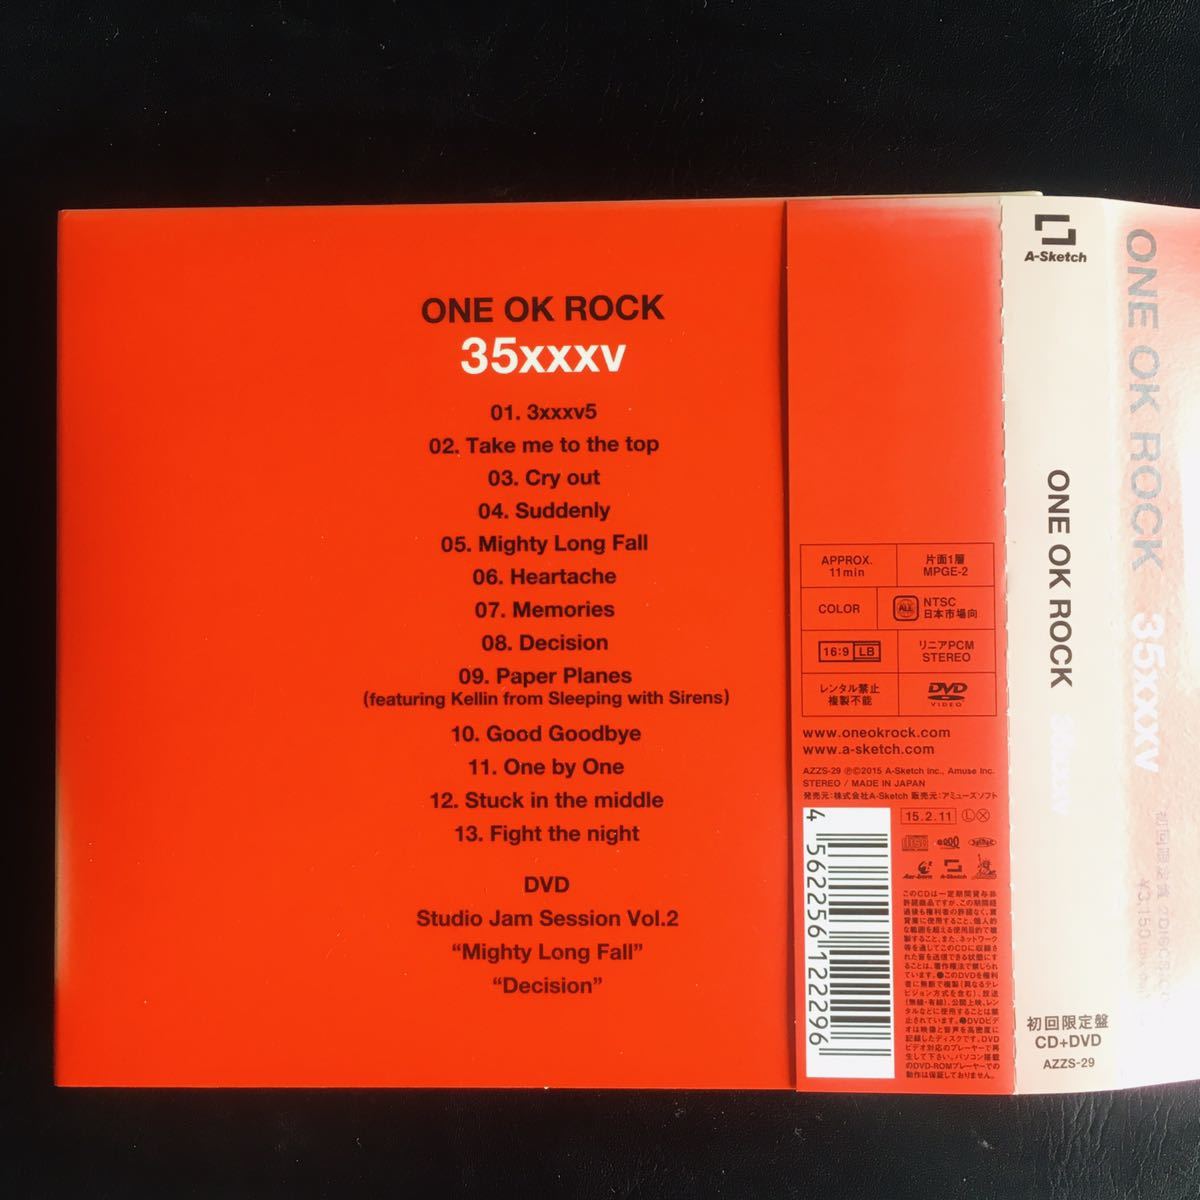 ポップスℛ ONE OK ROCK - pacpac様 専用 35xxxv 初回 初回限定盤 4枚 